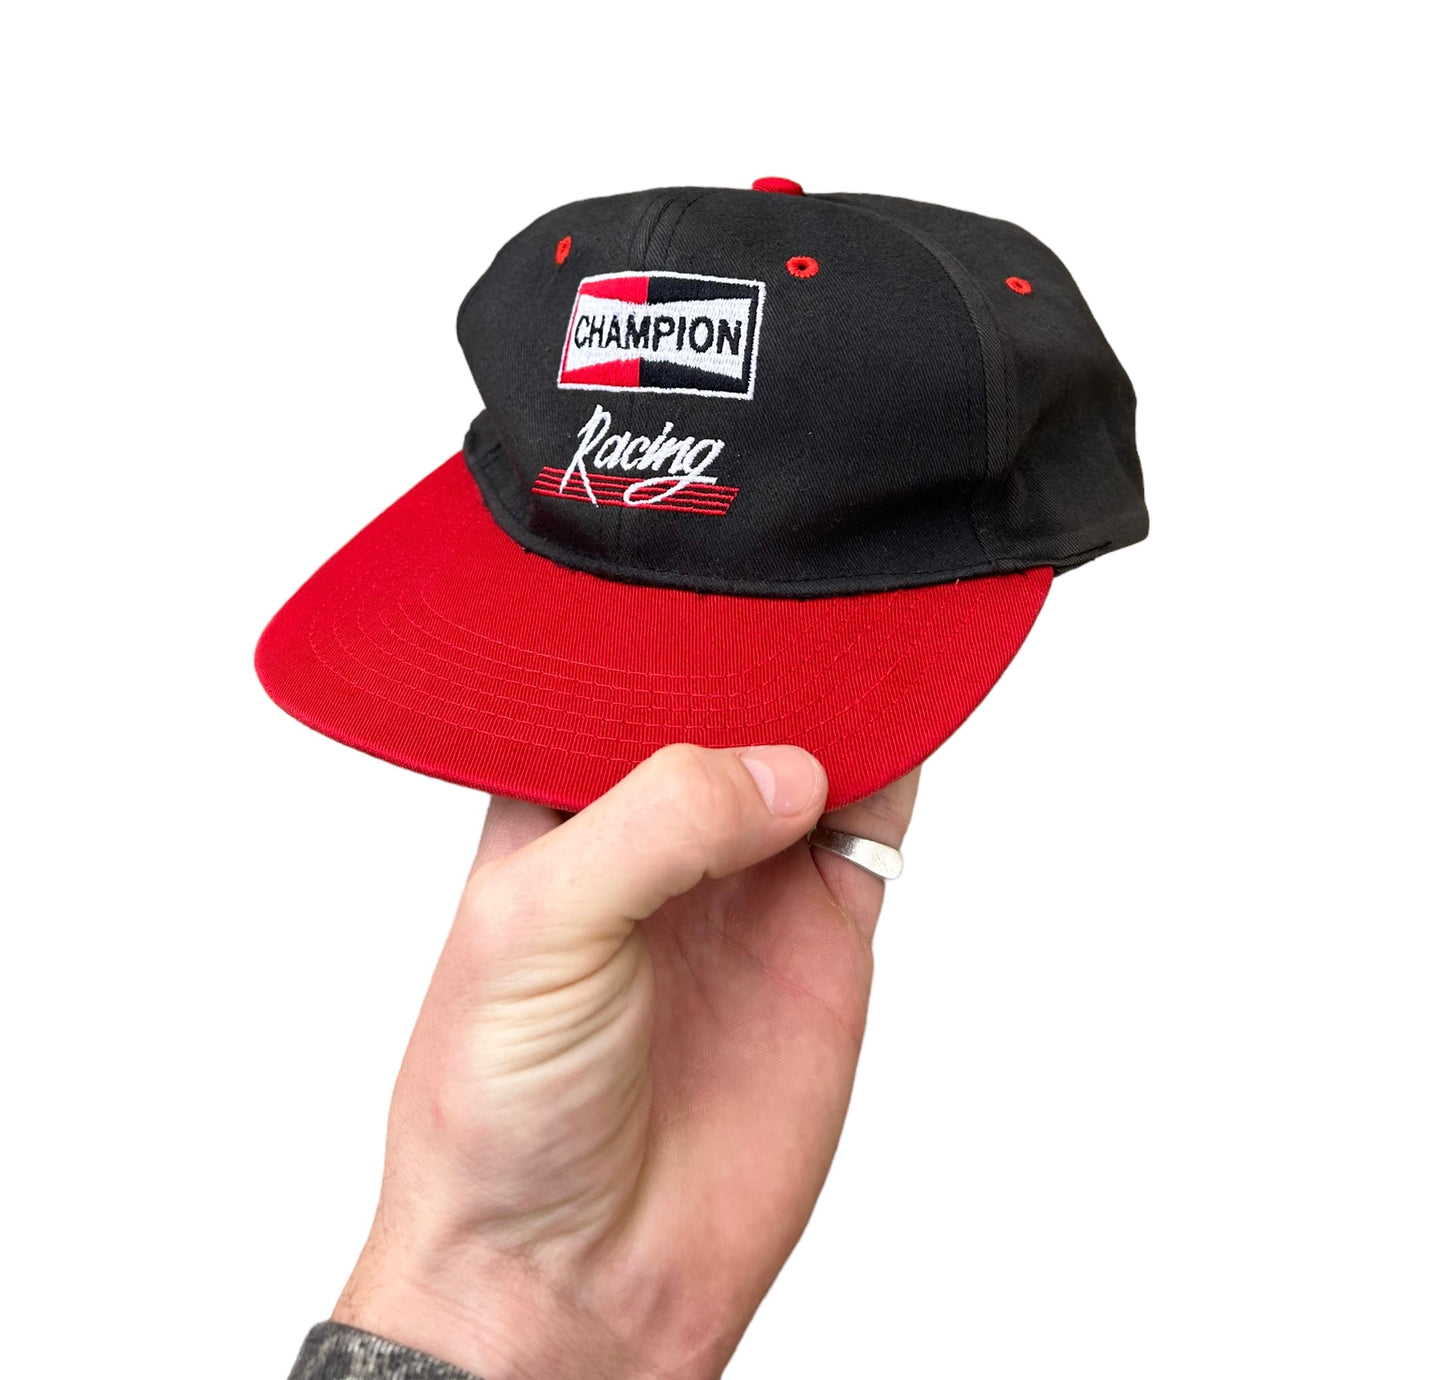 Vintage Champion Racing Cap